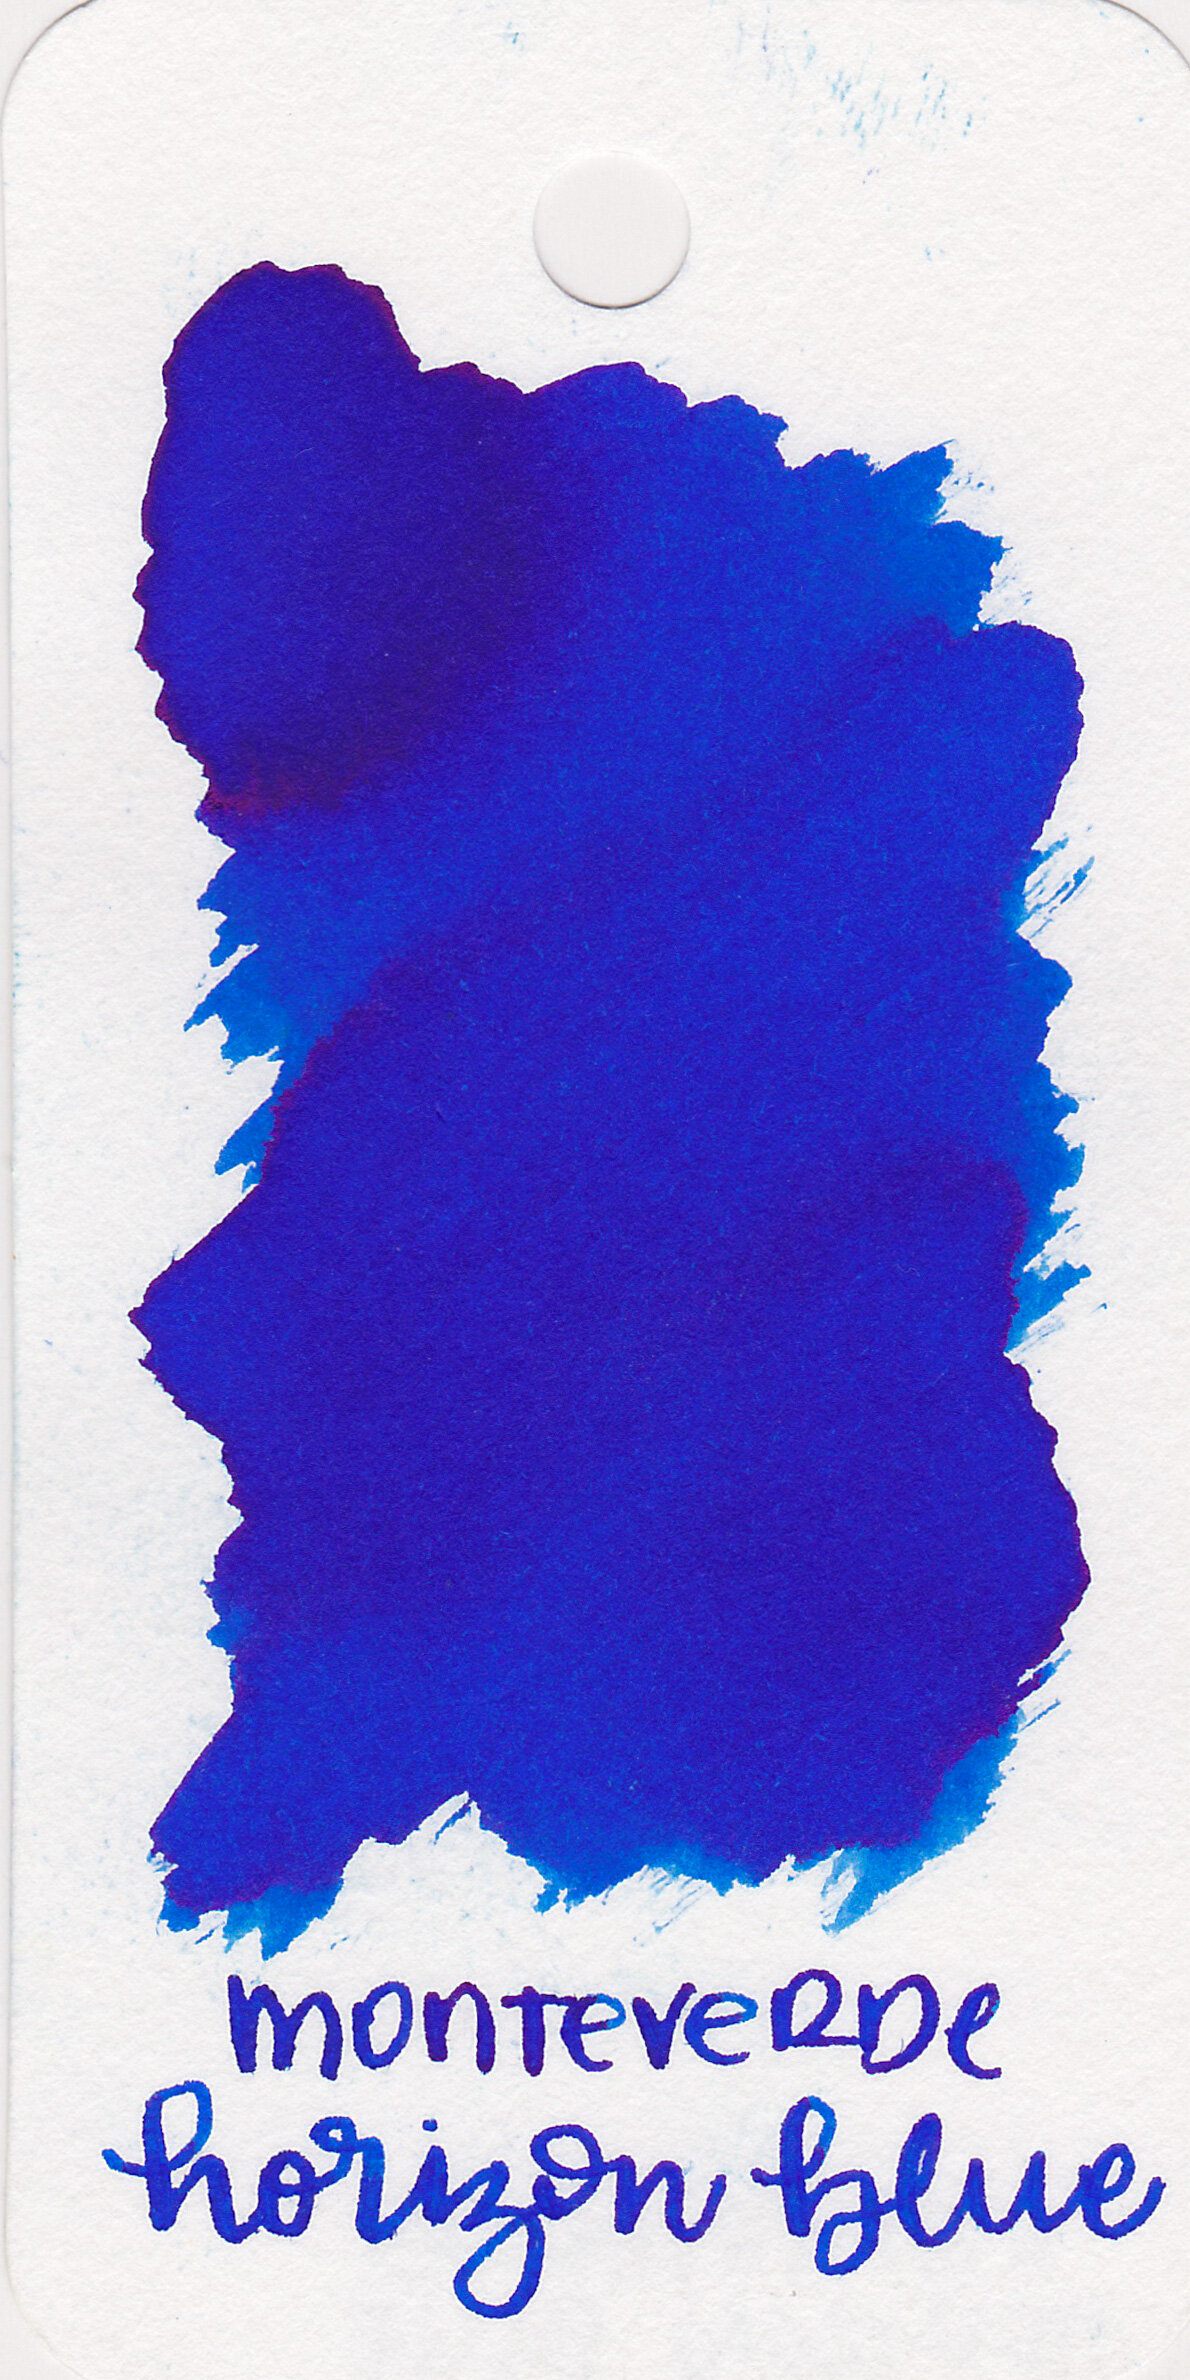 mv-horizon-blue-1.jpg